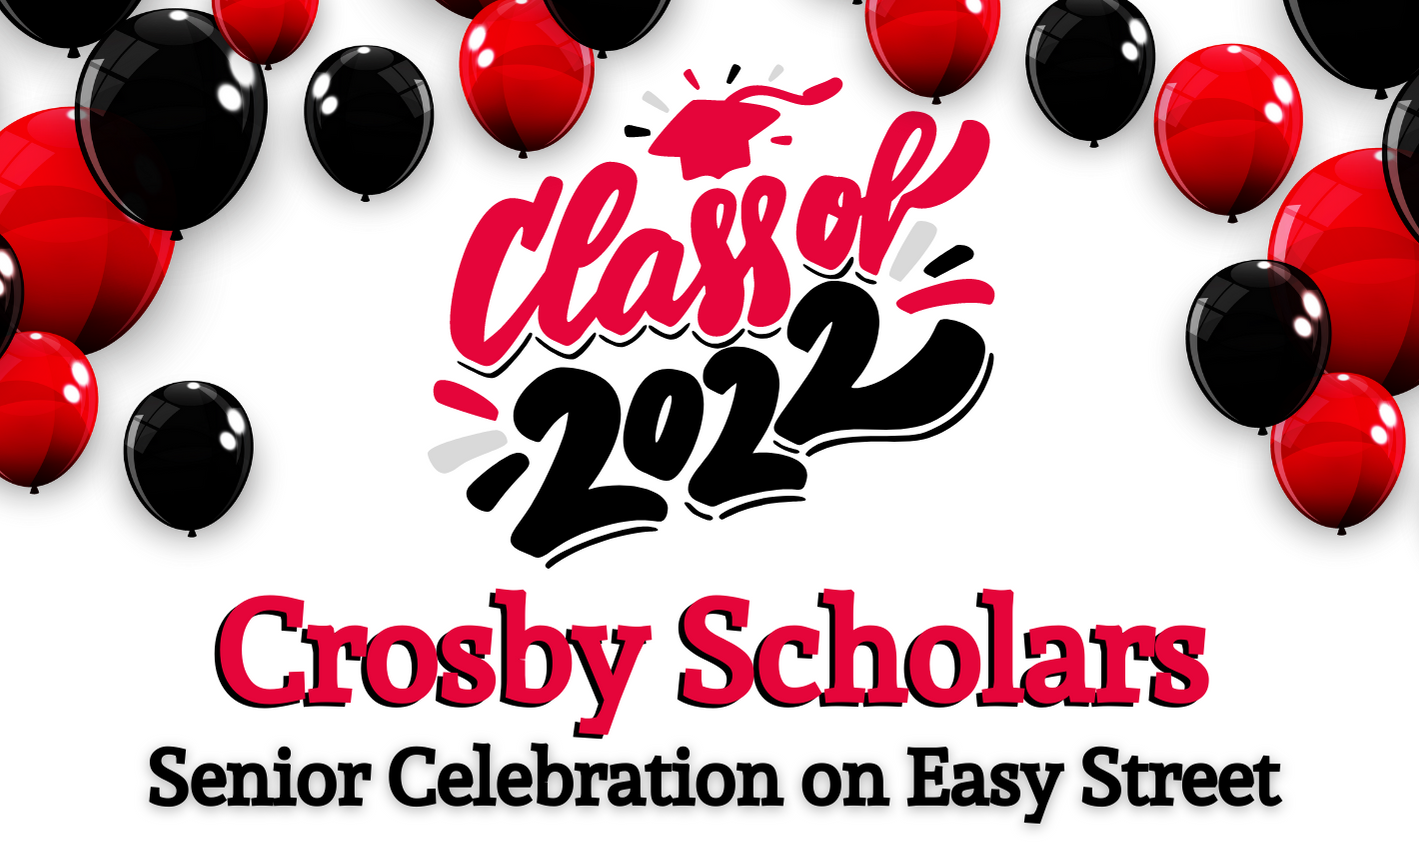 Crosby Scholars Senior Celebration